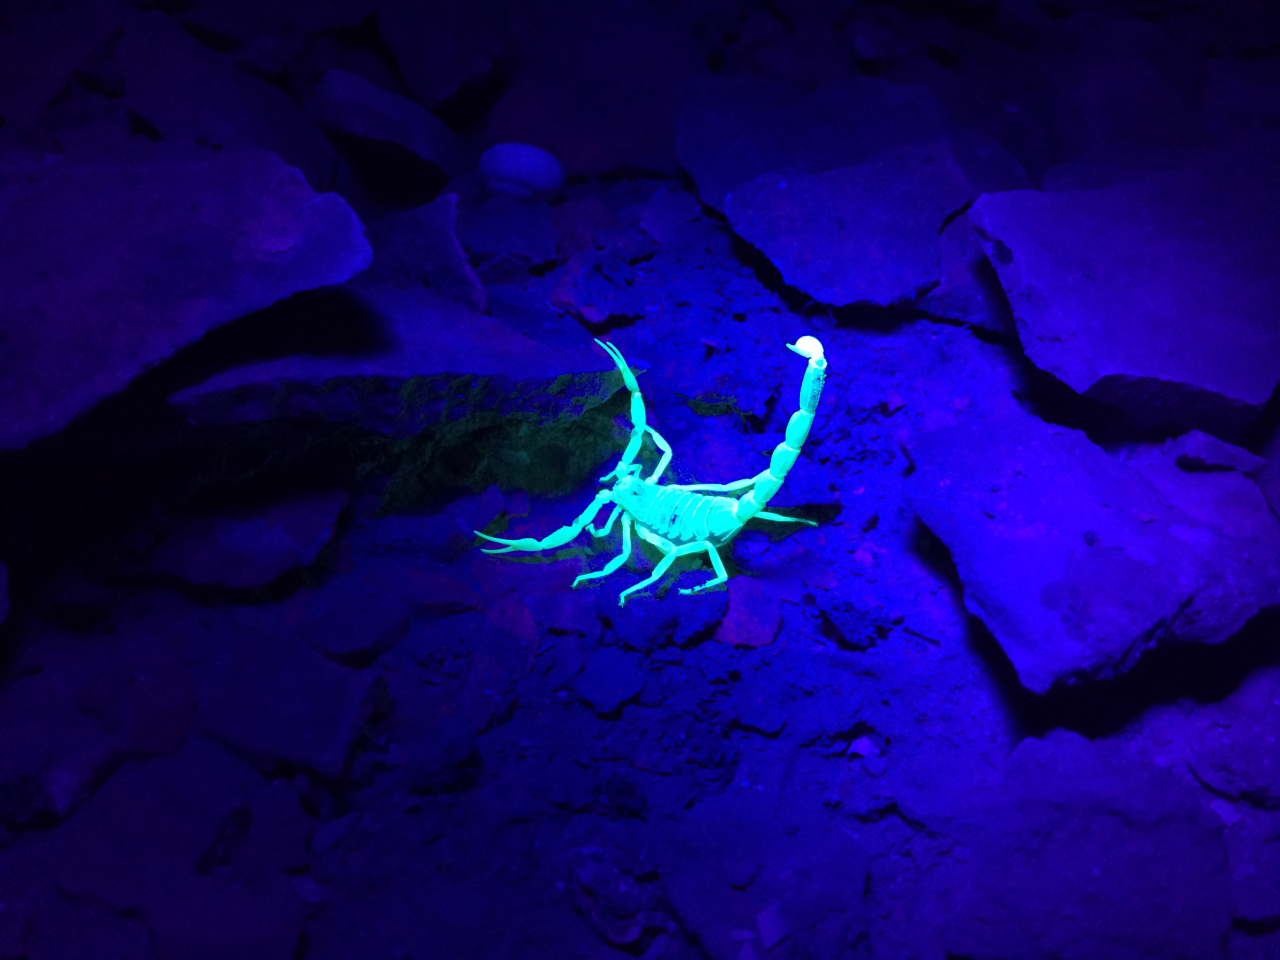 Yellow Scorpion in UV Lights